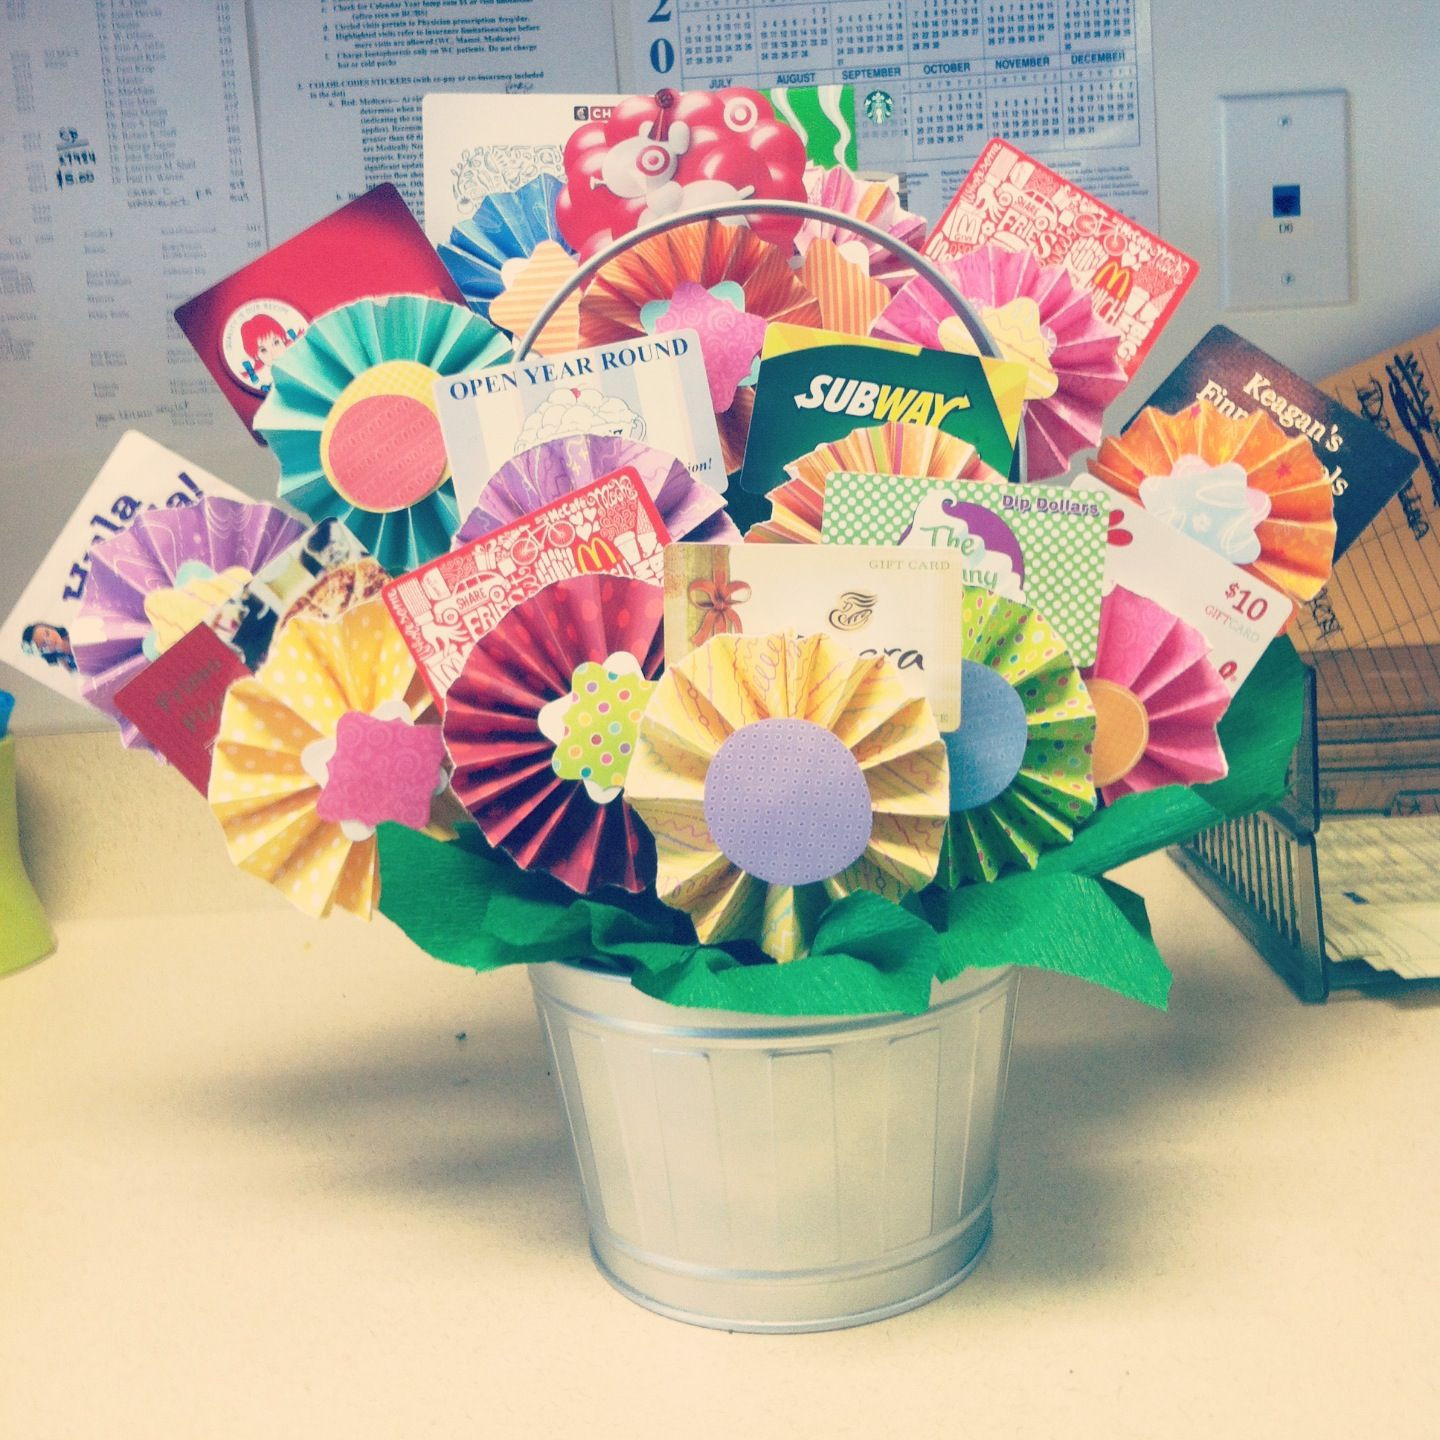 Gift Card Basket Display Ideas
 DIY Flower t card basket using accordion fold flowers